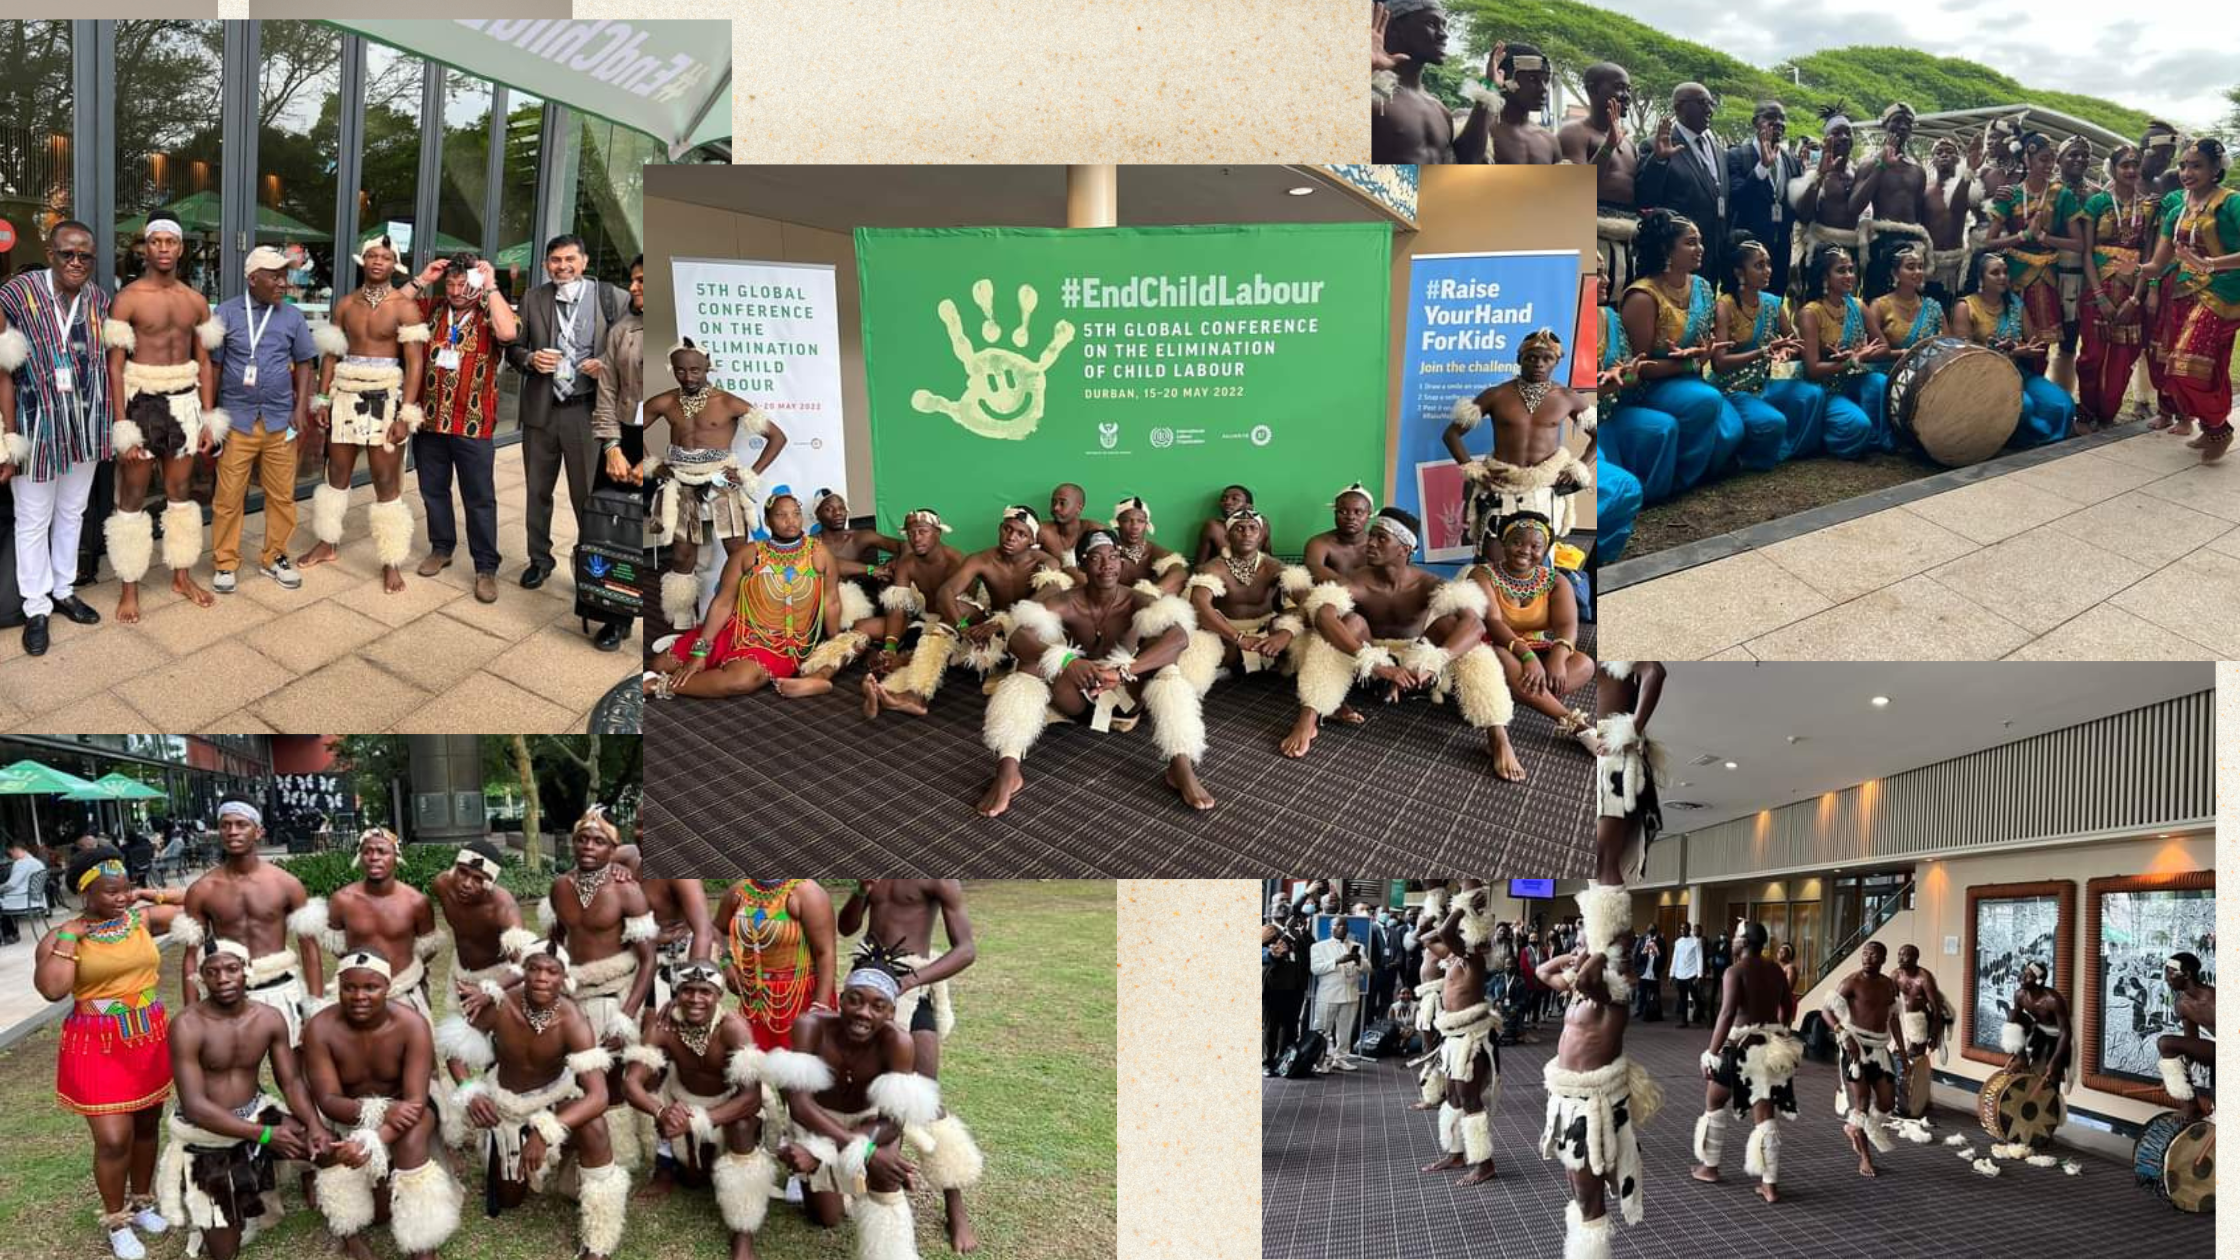 Indlo zulu Indigenous group